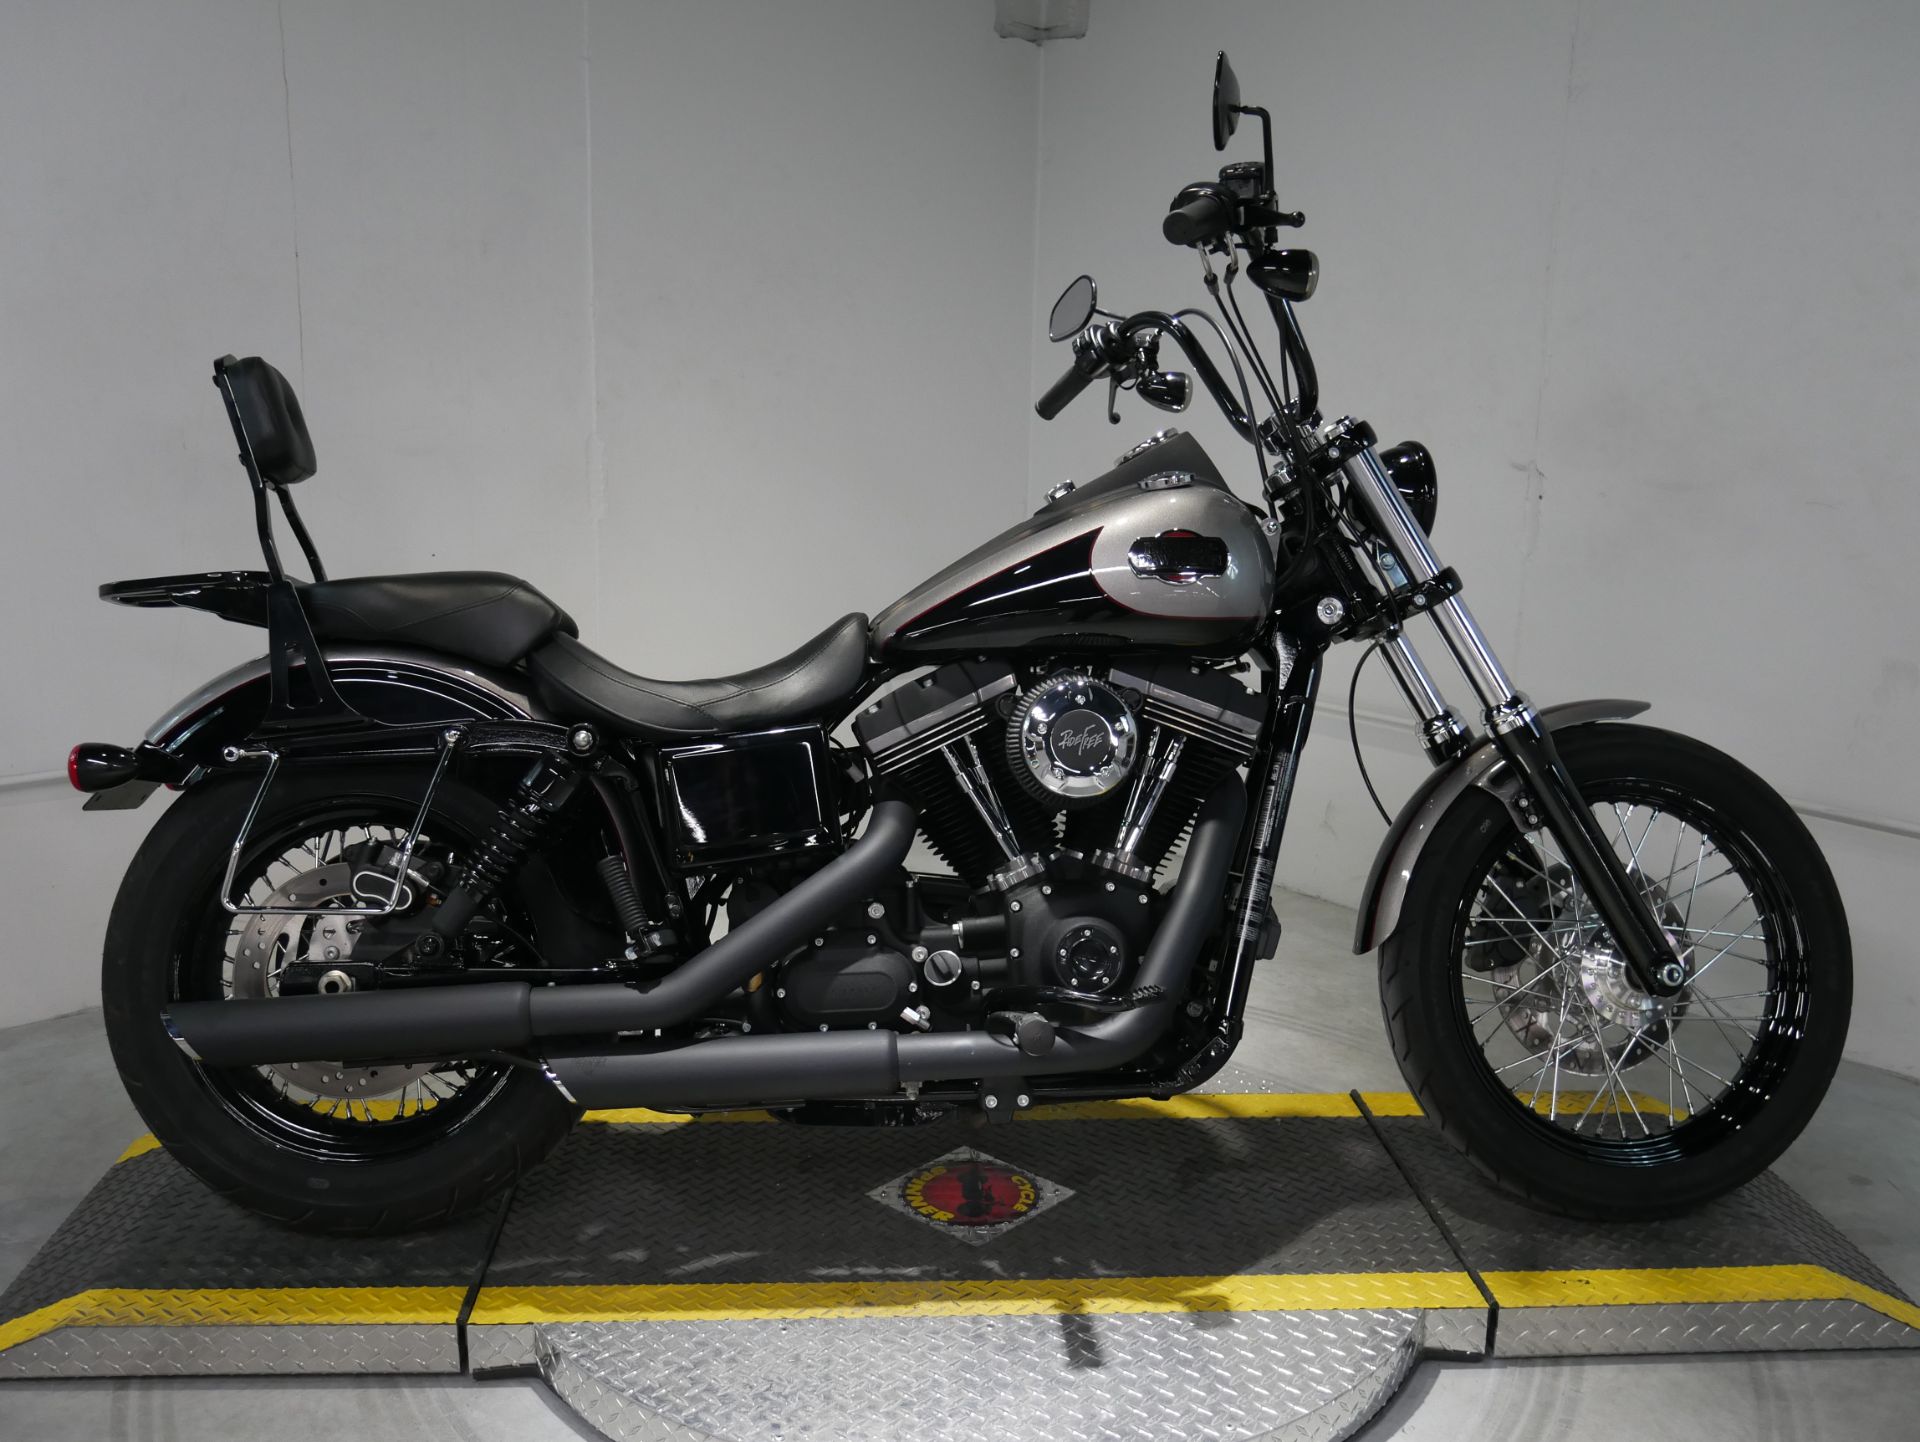 Used 2016 Harley Davidson Street Bob Billet Silver Vivid Black Motorcycles In Dubuque Ia 309615